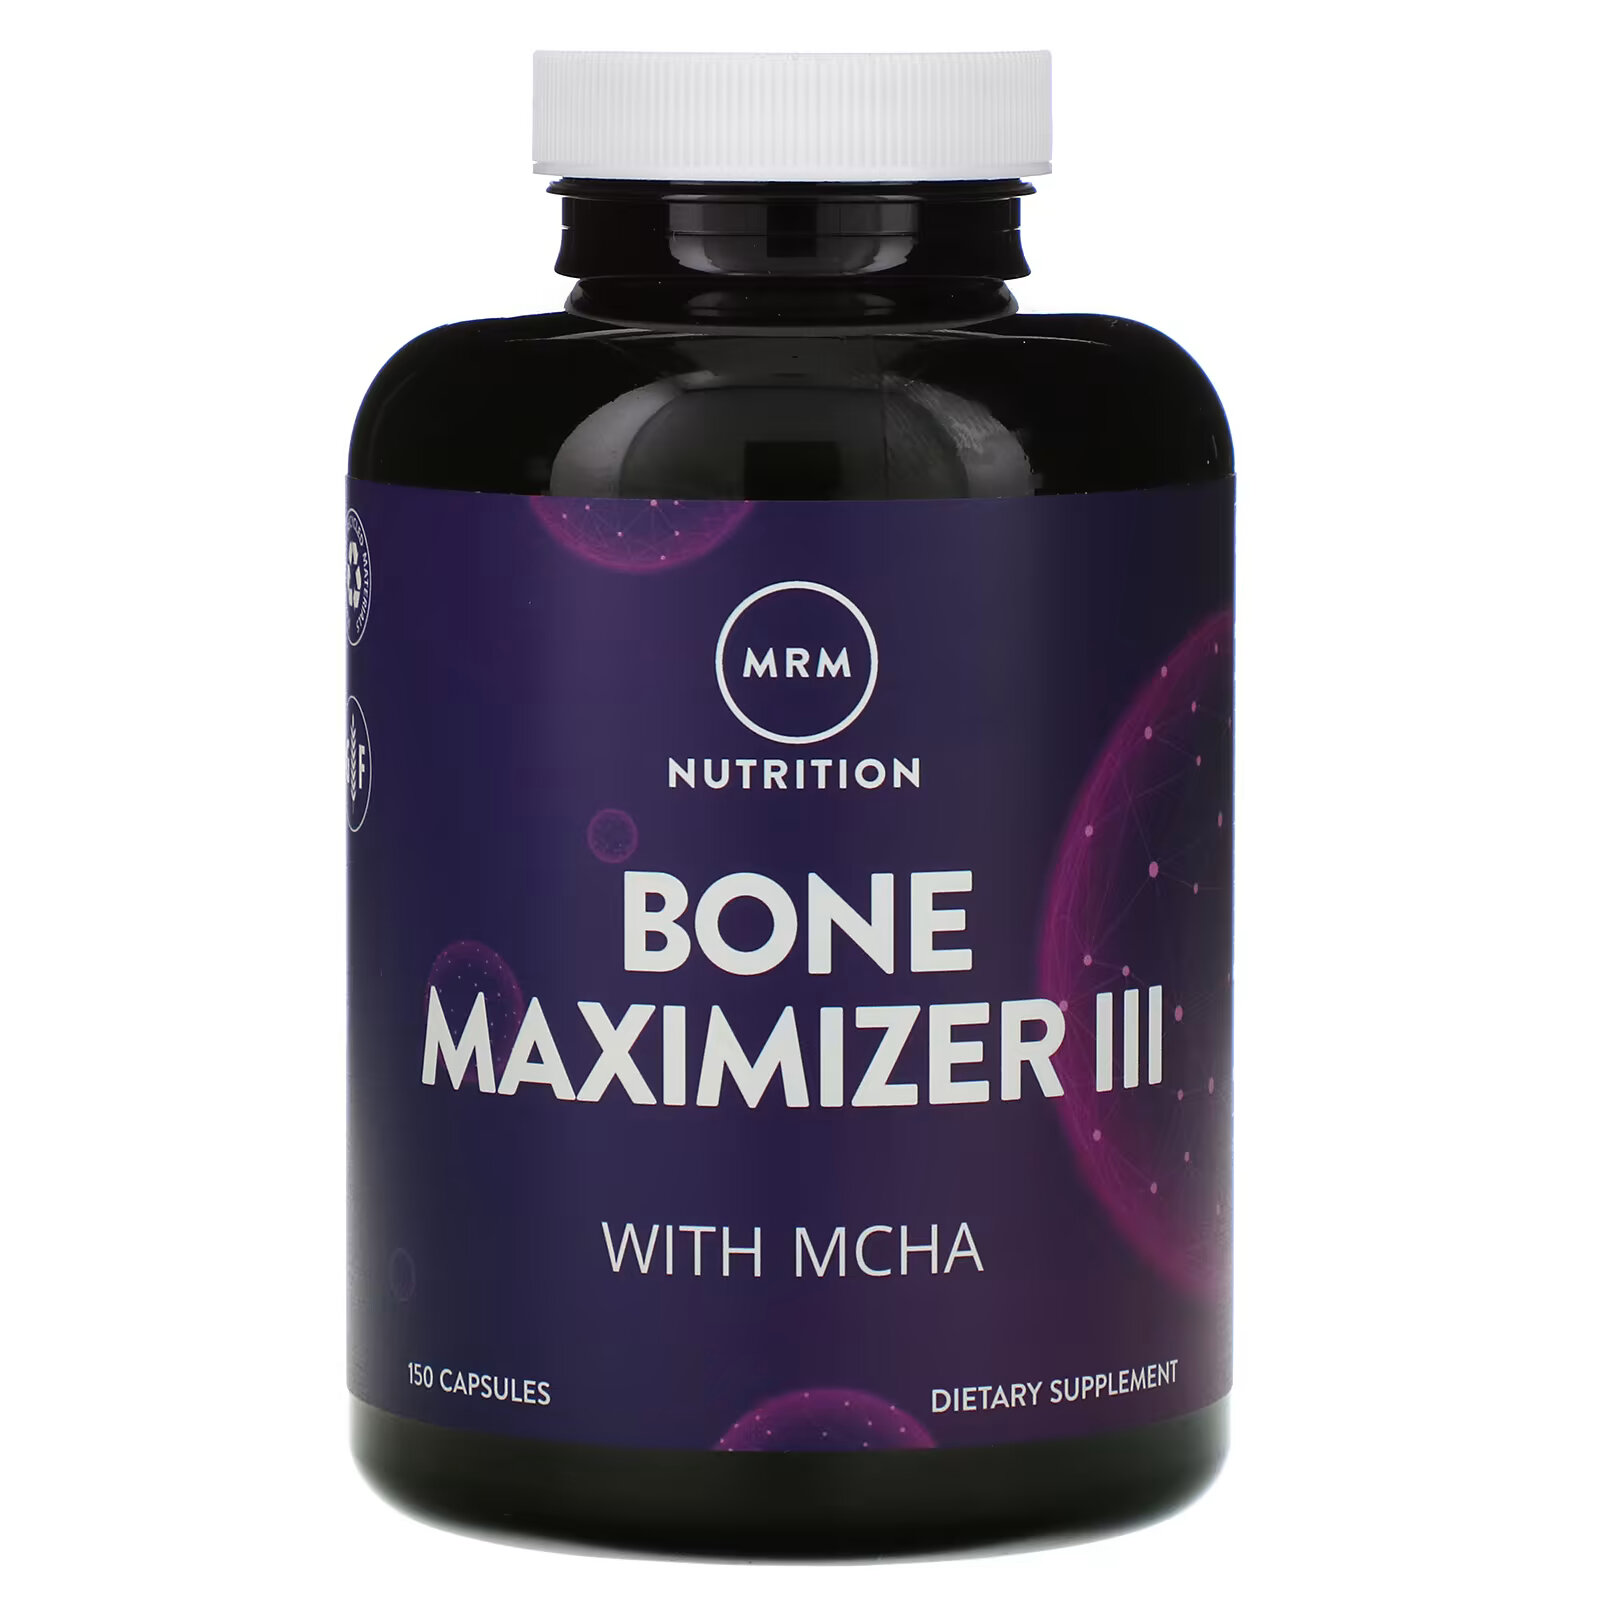 mrm nutrition vegan bone maximizer 120 веганских капсул MRM Nutrition, Nutrition, Bone Maximizer III с МКГА, 150 капсул